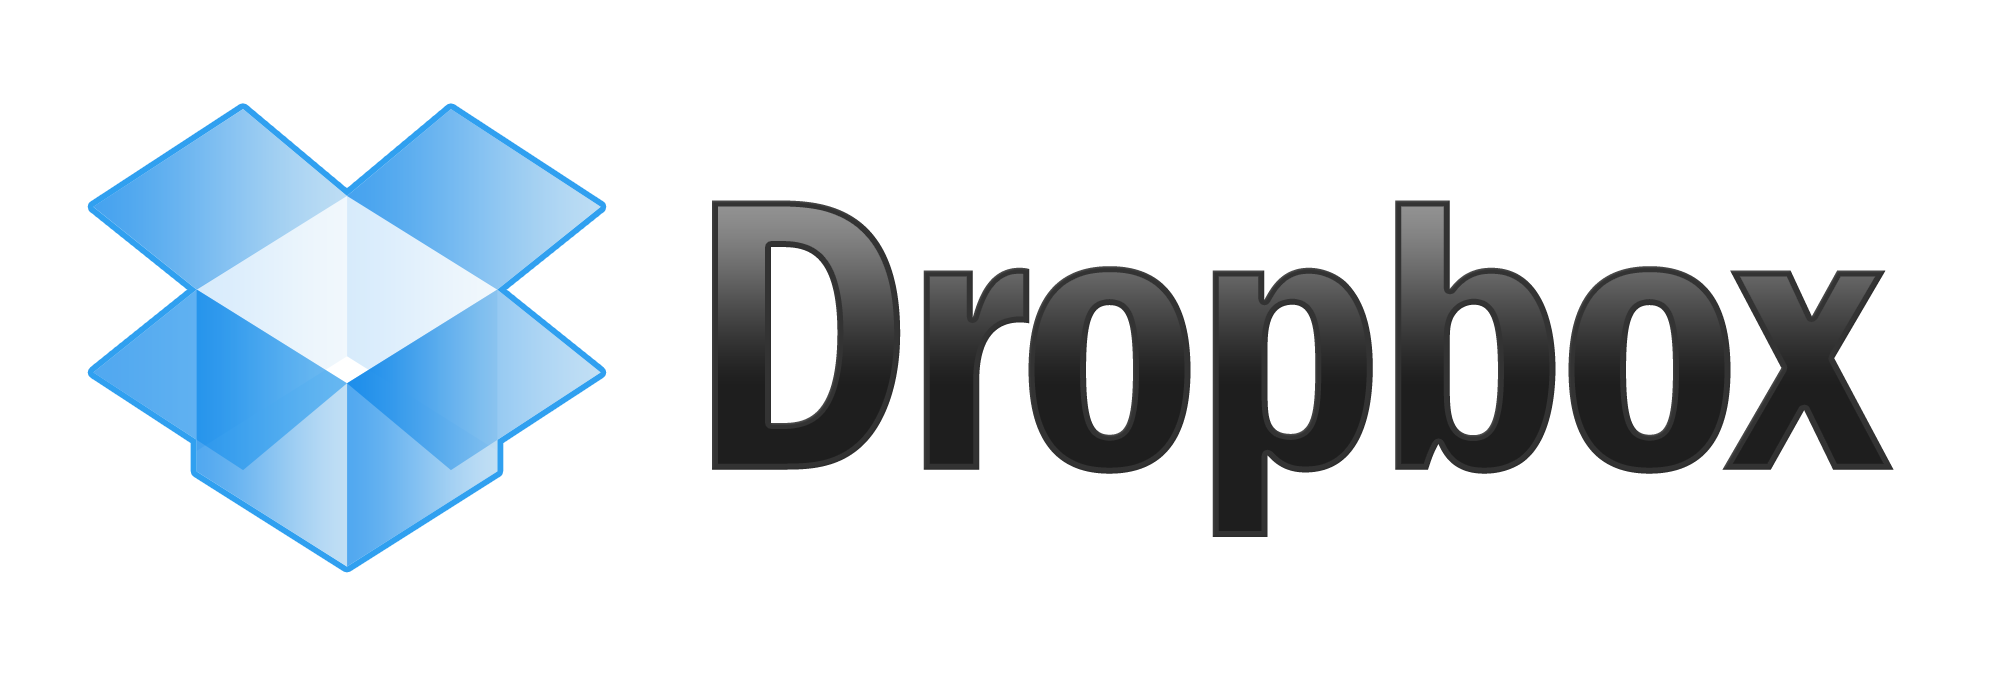 dropbox-logo-large